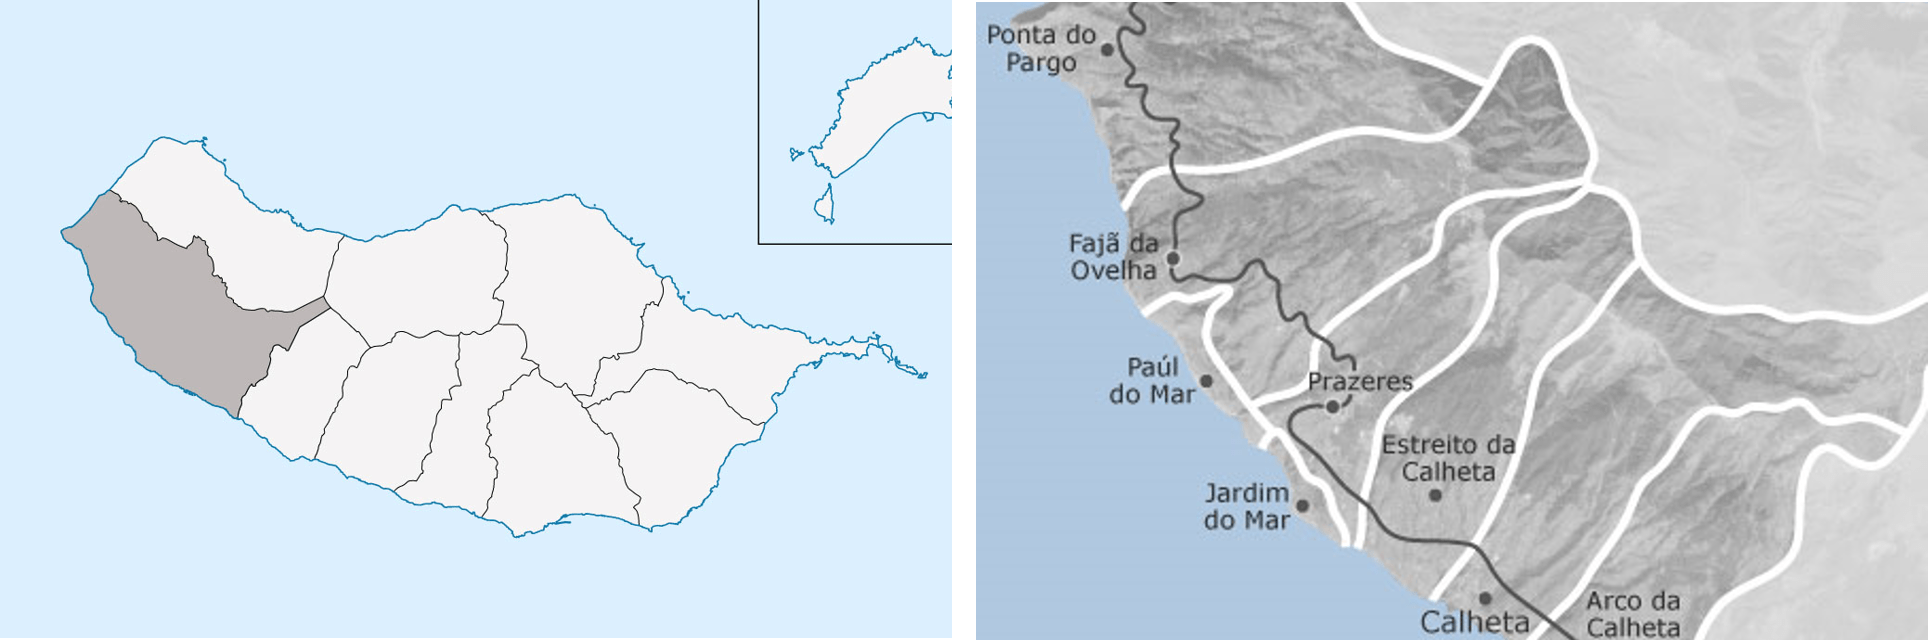 Municipality of Calheta on Madeira - Ocean Retreat